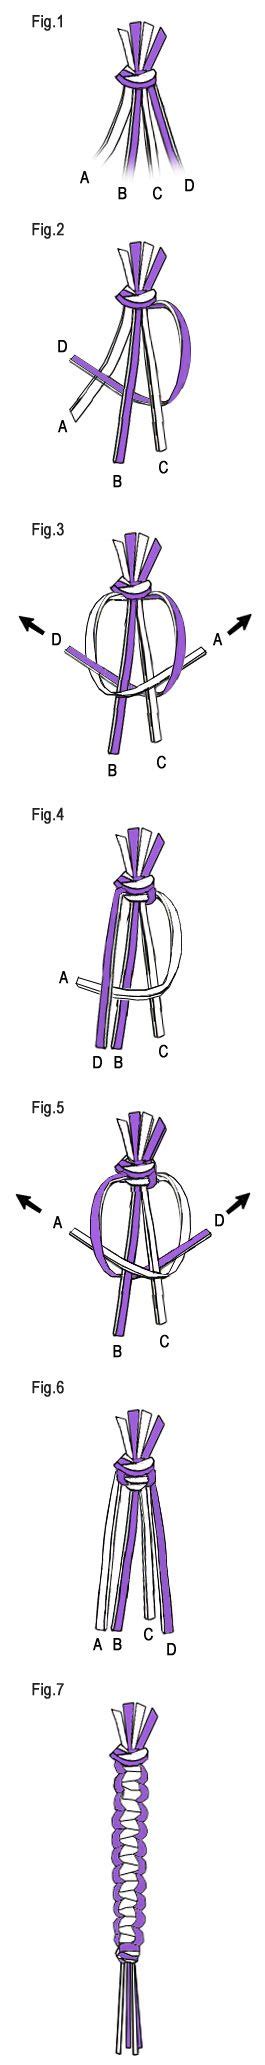 How to make the 2x2x2 triangle lanyard. Cobra Stitch Instructions-0009 | Plastic lace, Bracelet crafts, Friendship bracelets diy